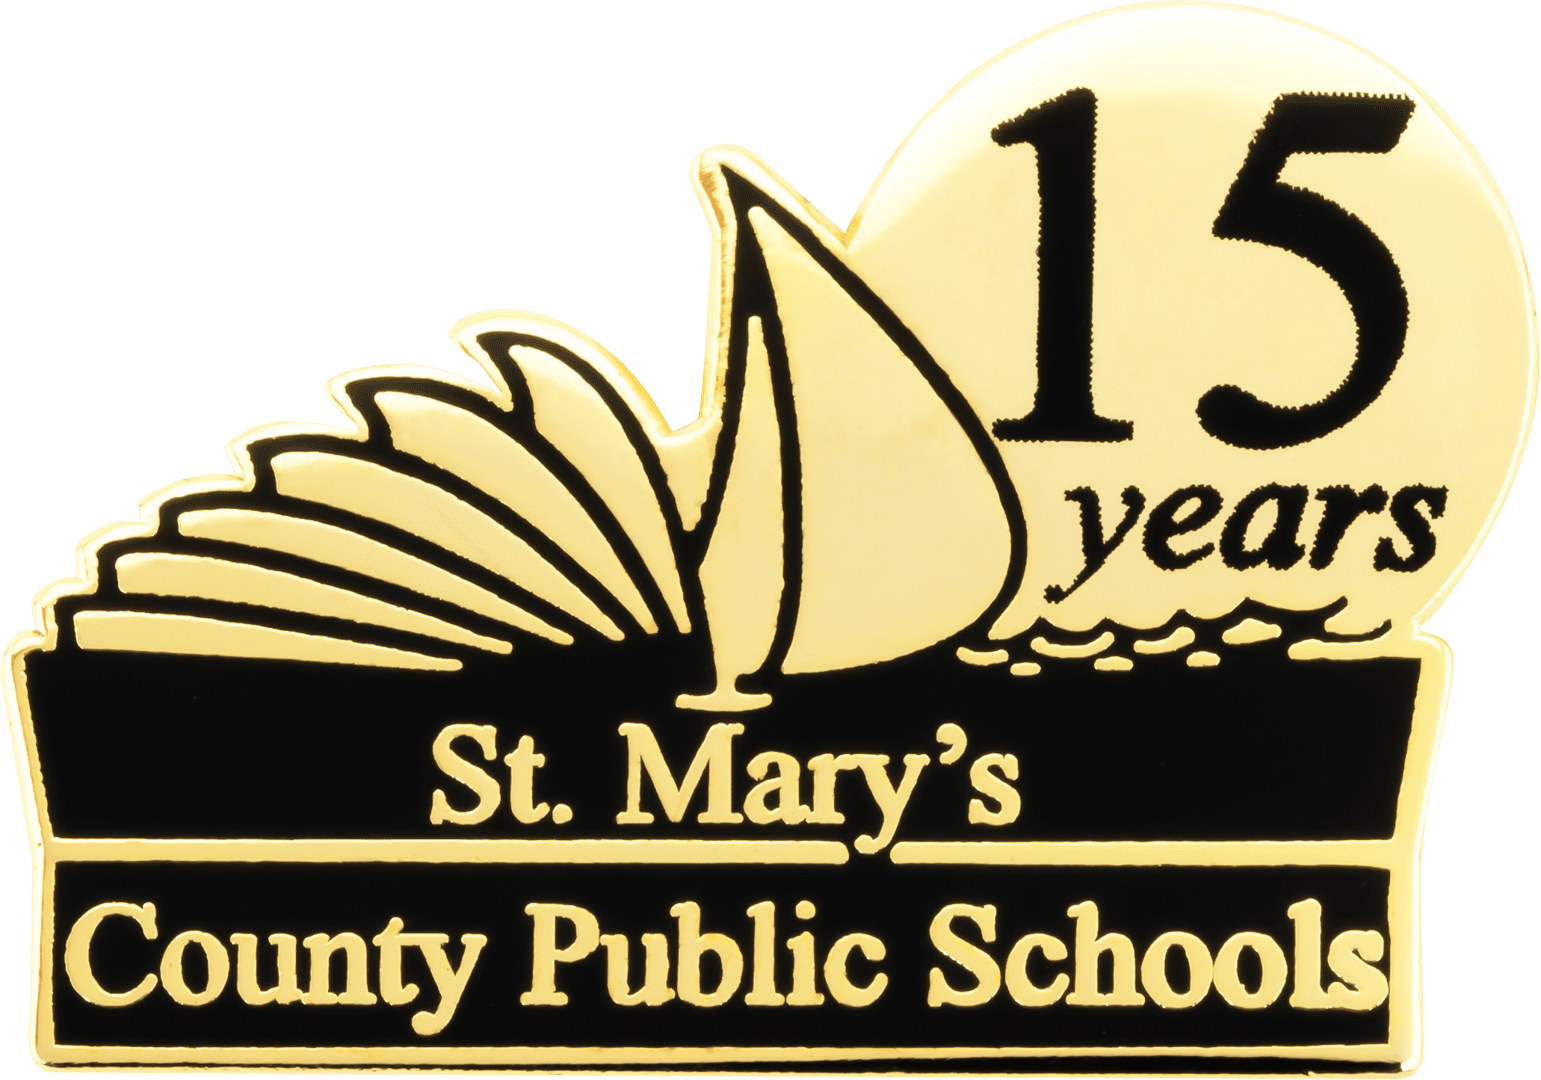 St. Marys County Public Schools - 15 Years